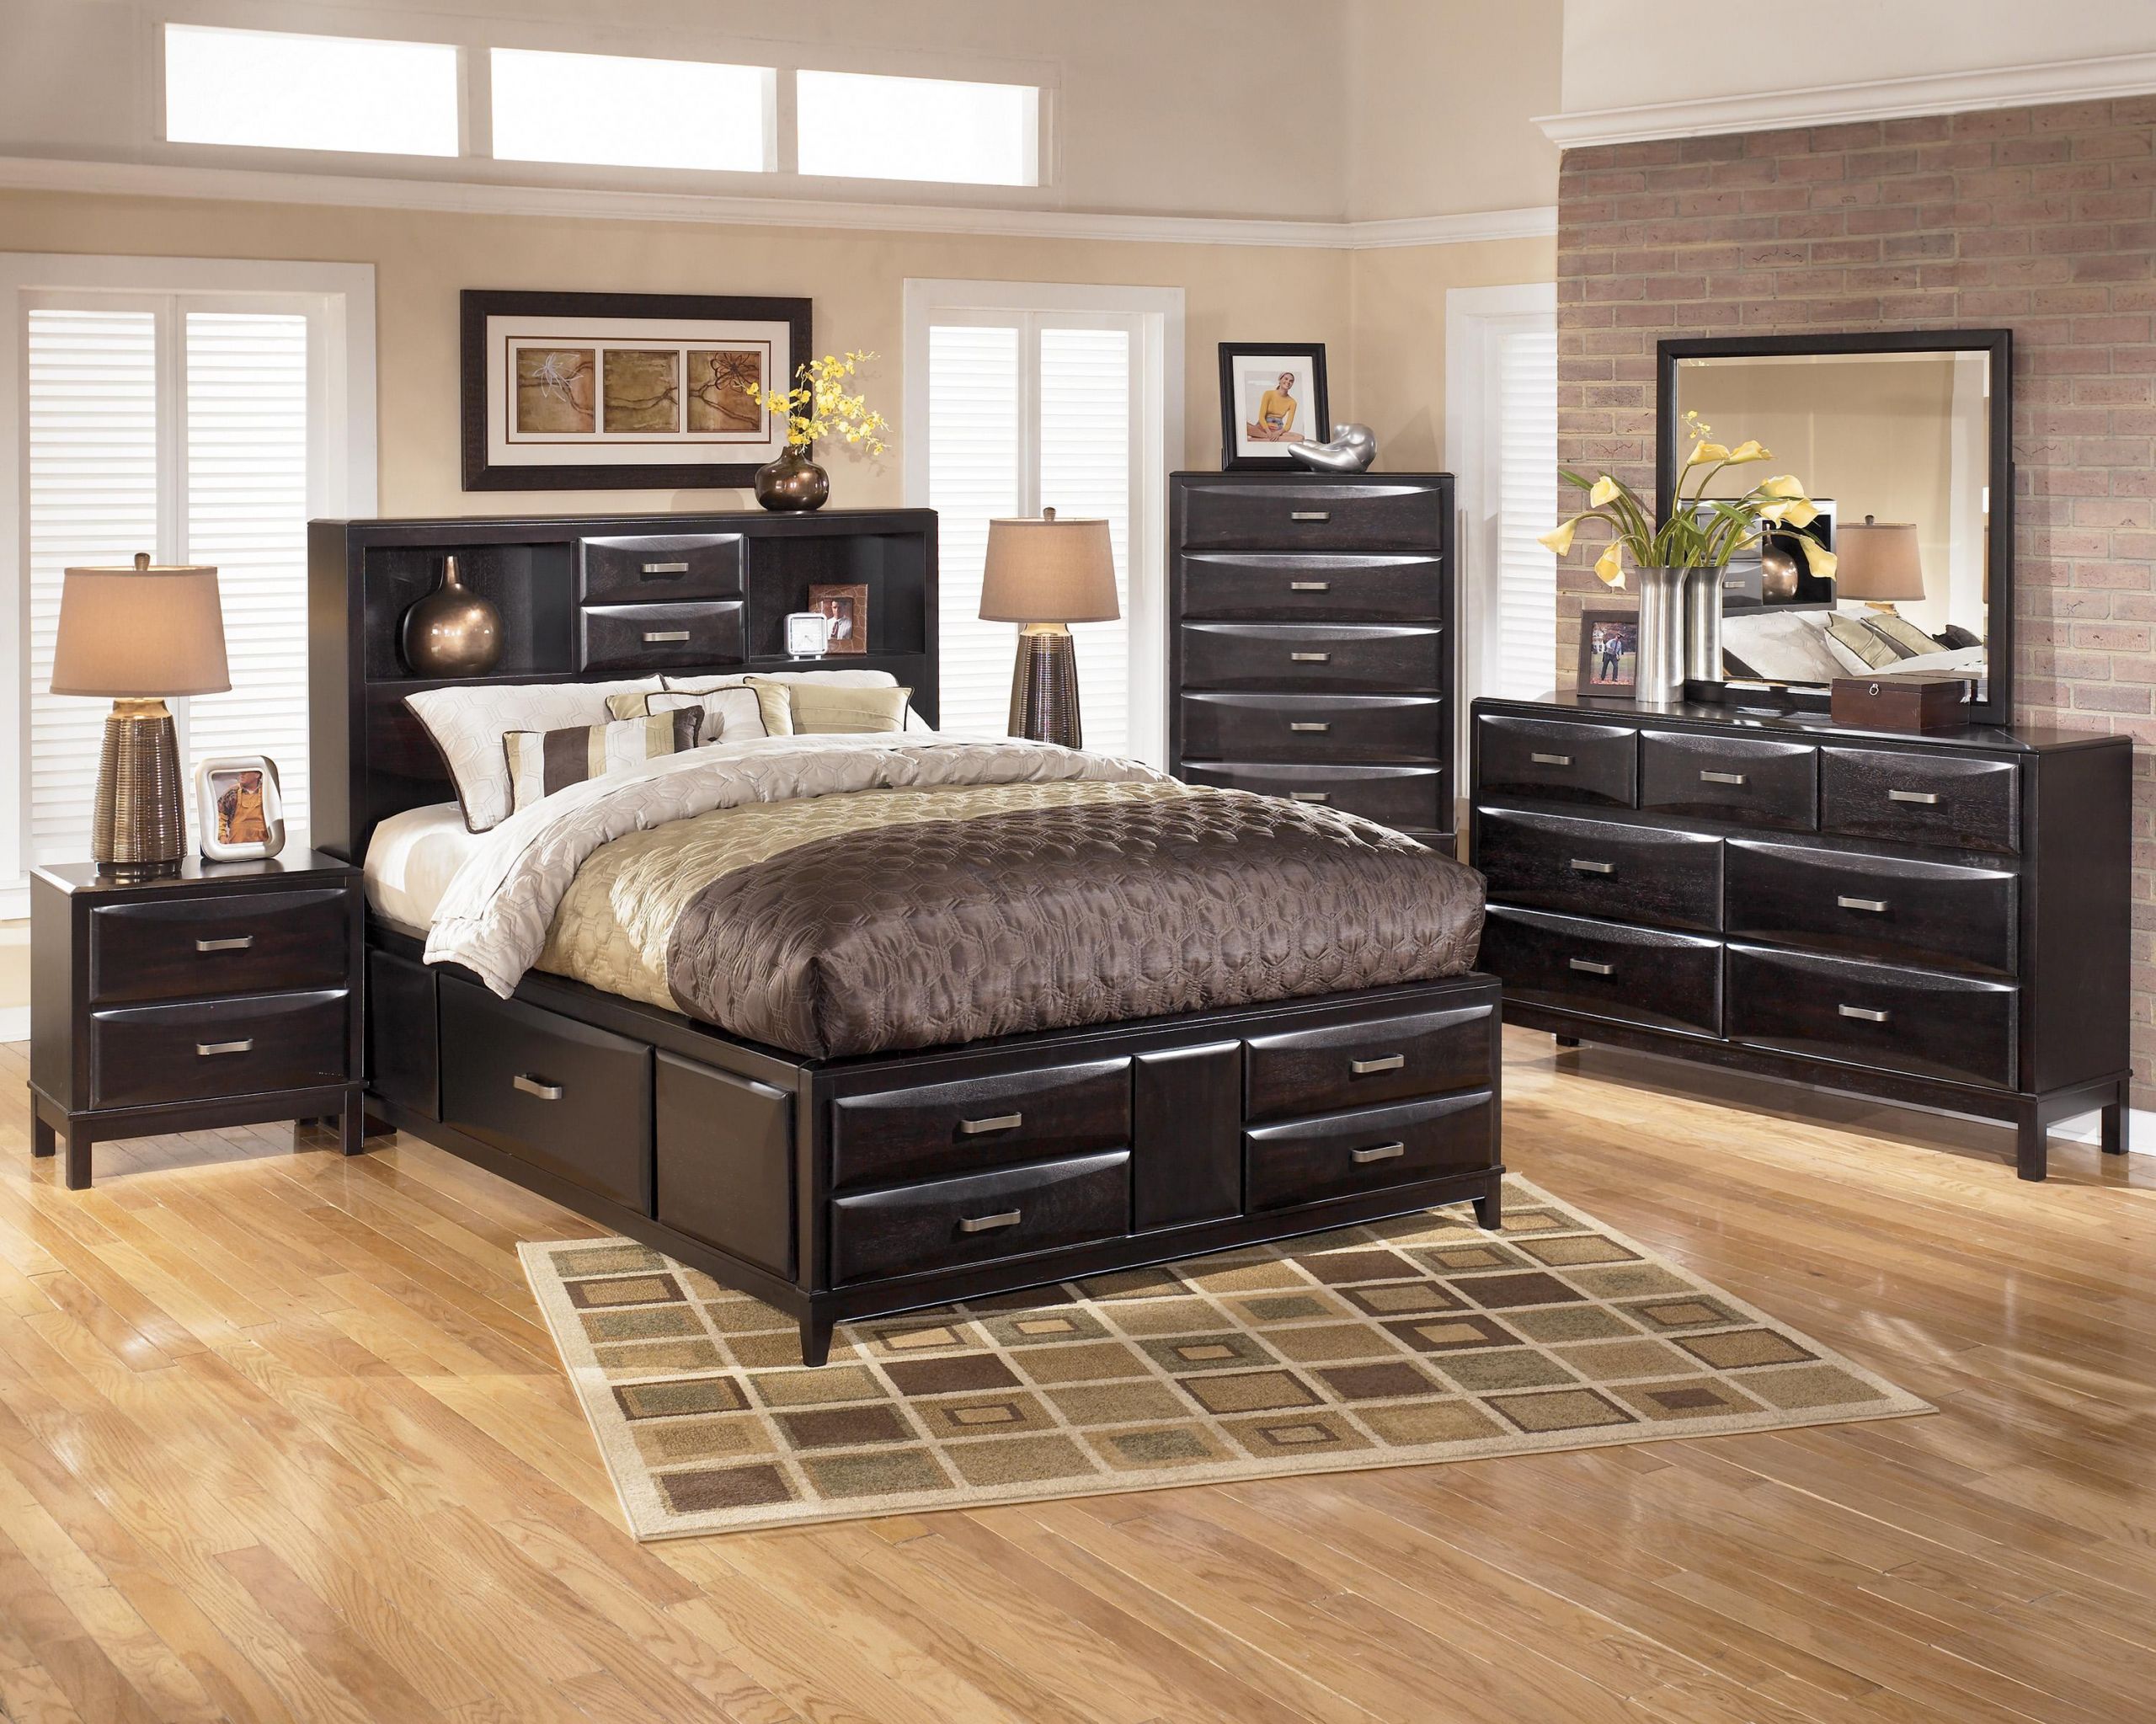 Full Size Storage Bedroom Sets
 Ashley Furniture Kira King Storage Bed